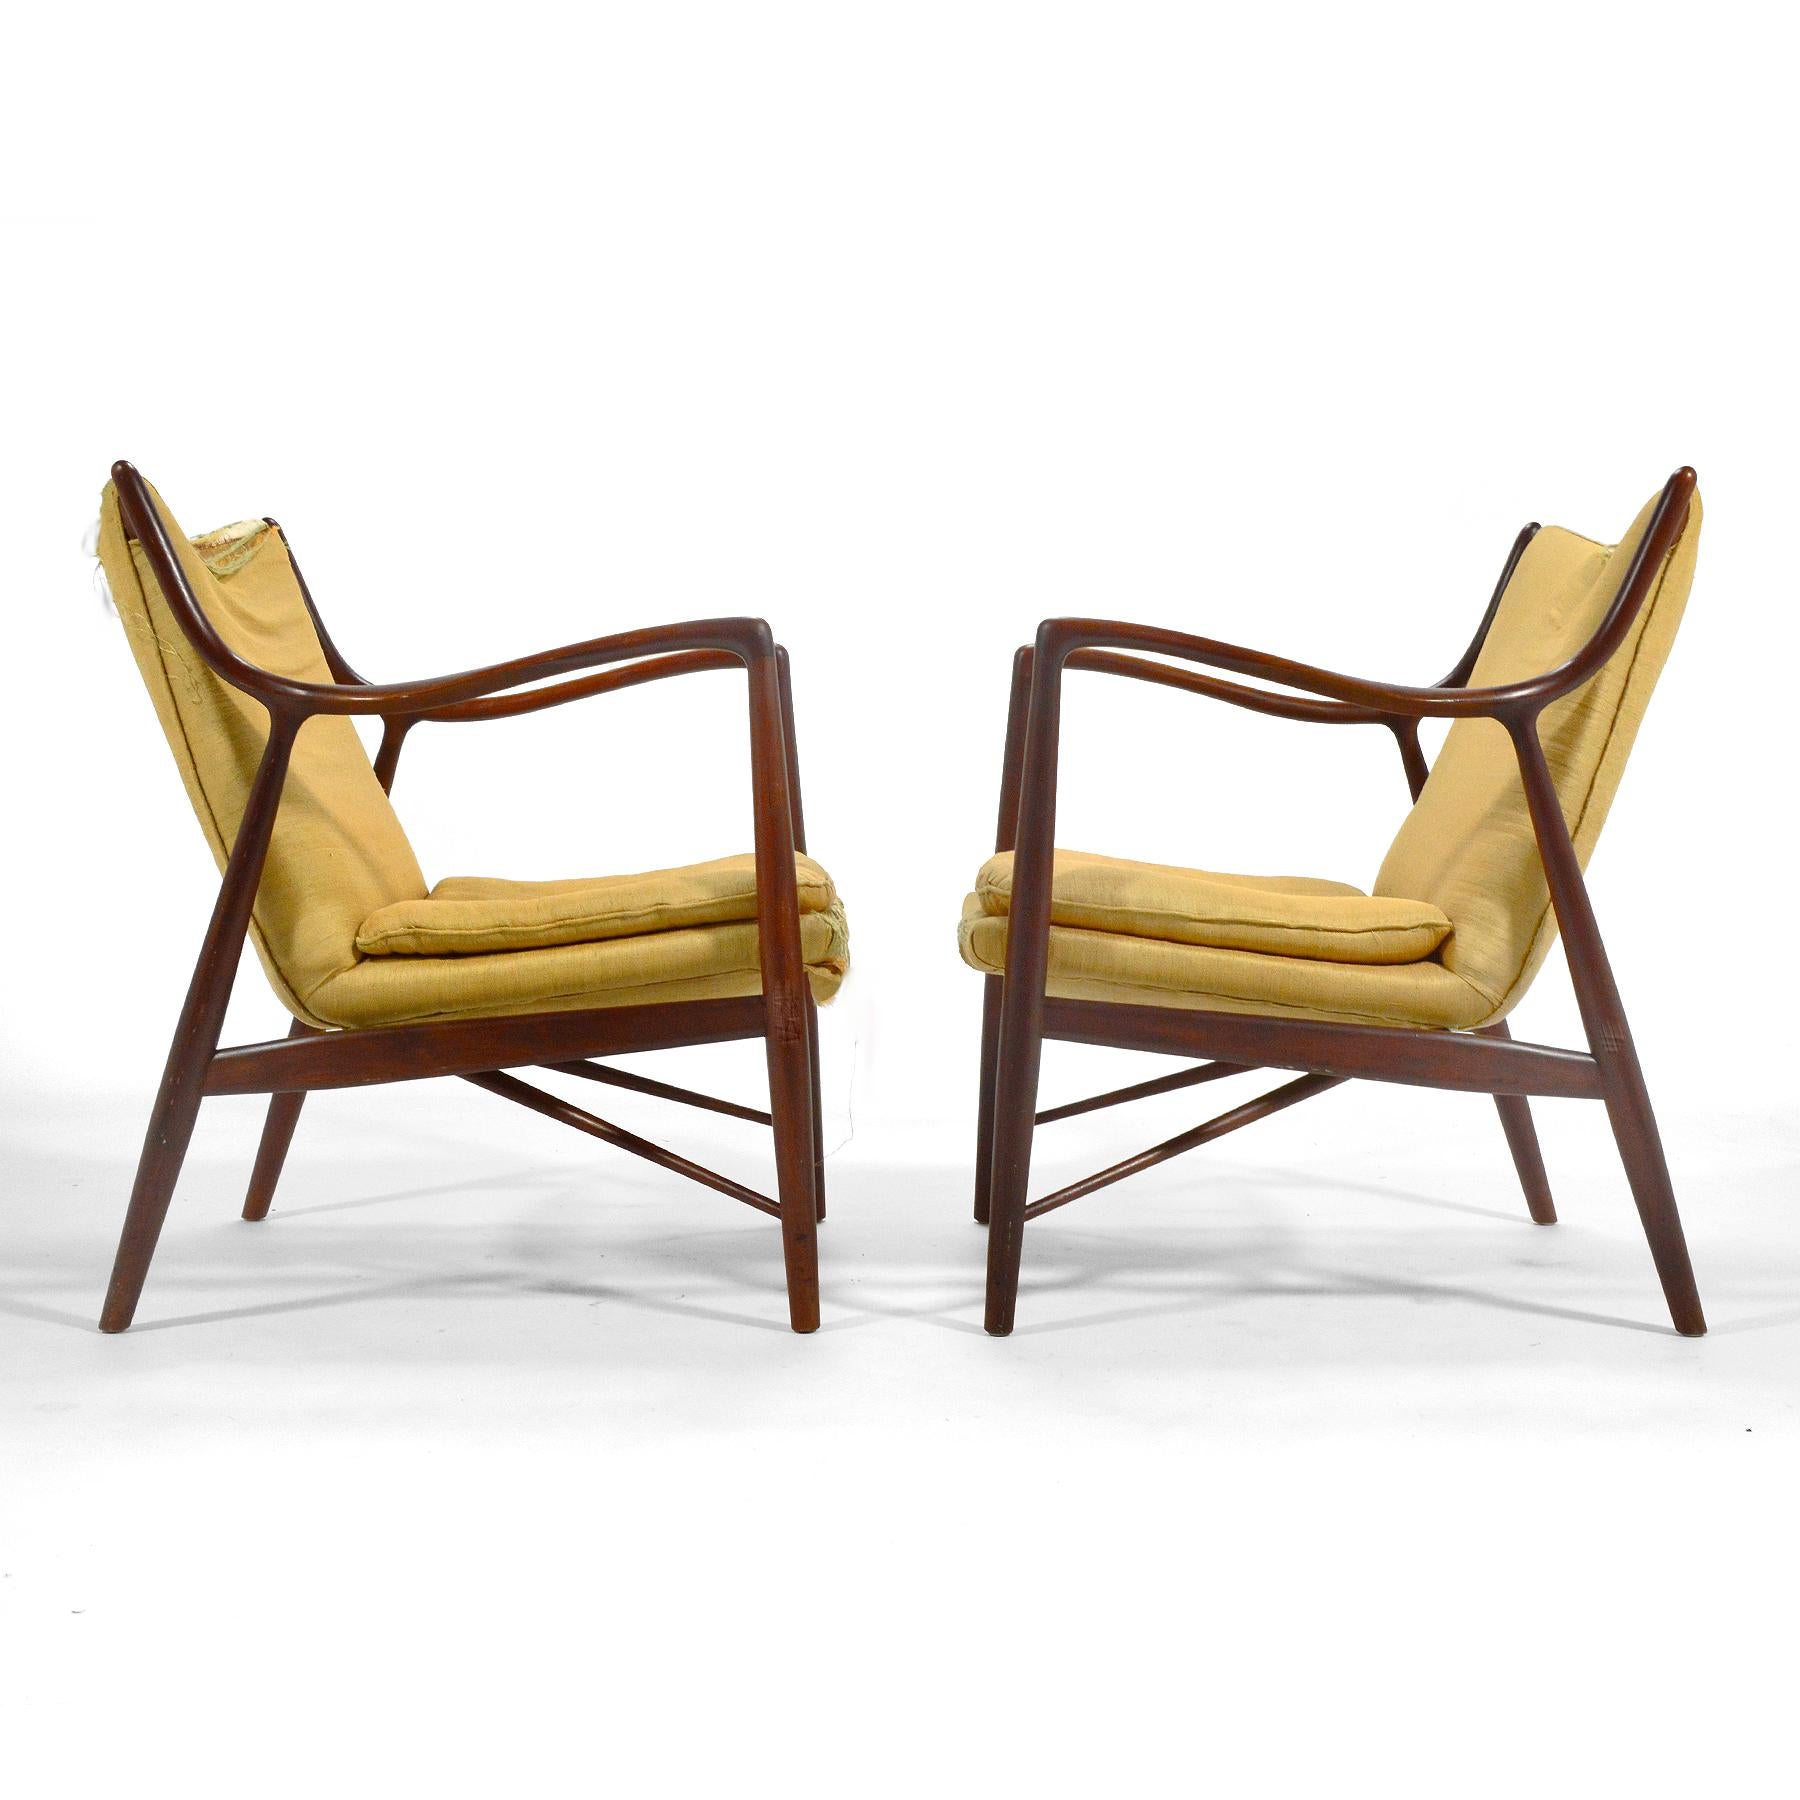 Scandinavian Modern Pair of Finn Juhl #45 Chairs by Baker For Sale